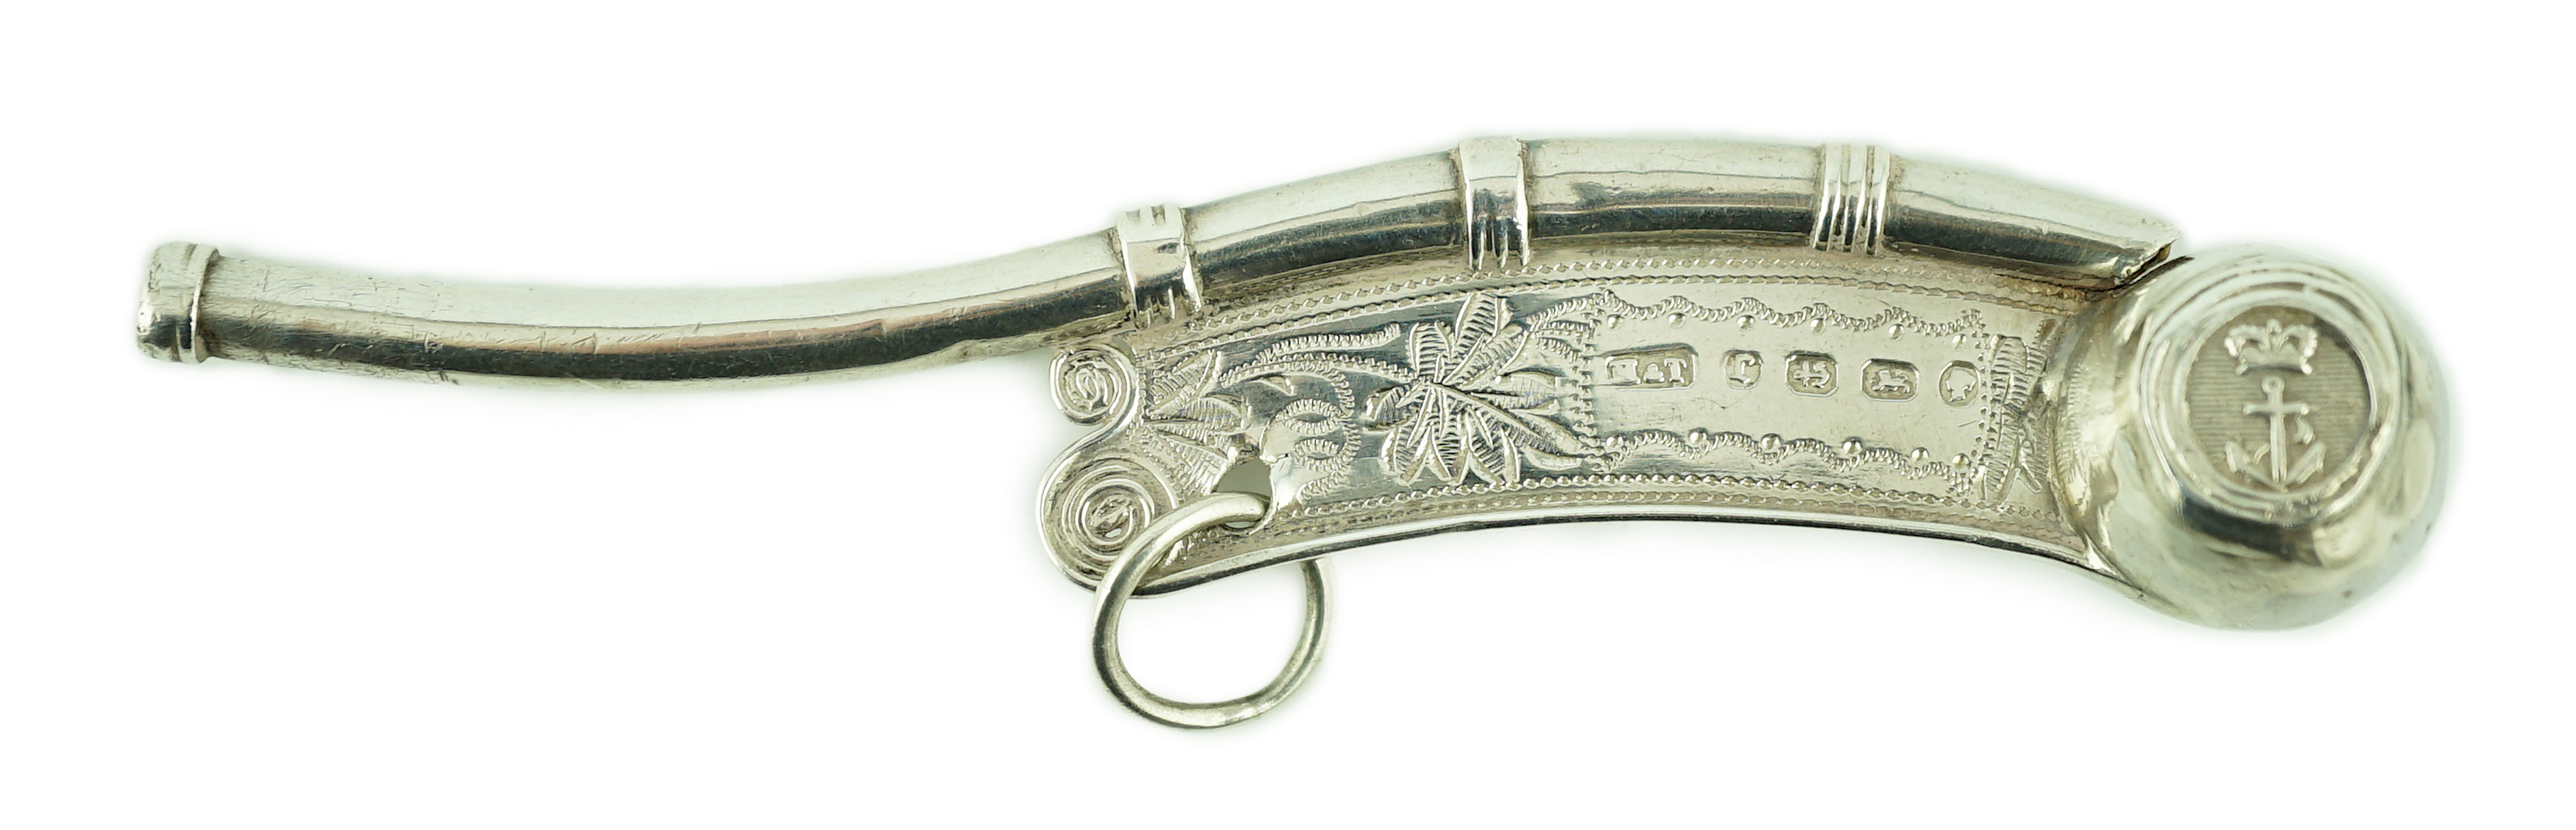 A Victorian engraved silver Bosun’s call, Hilliard & Thomasson